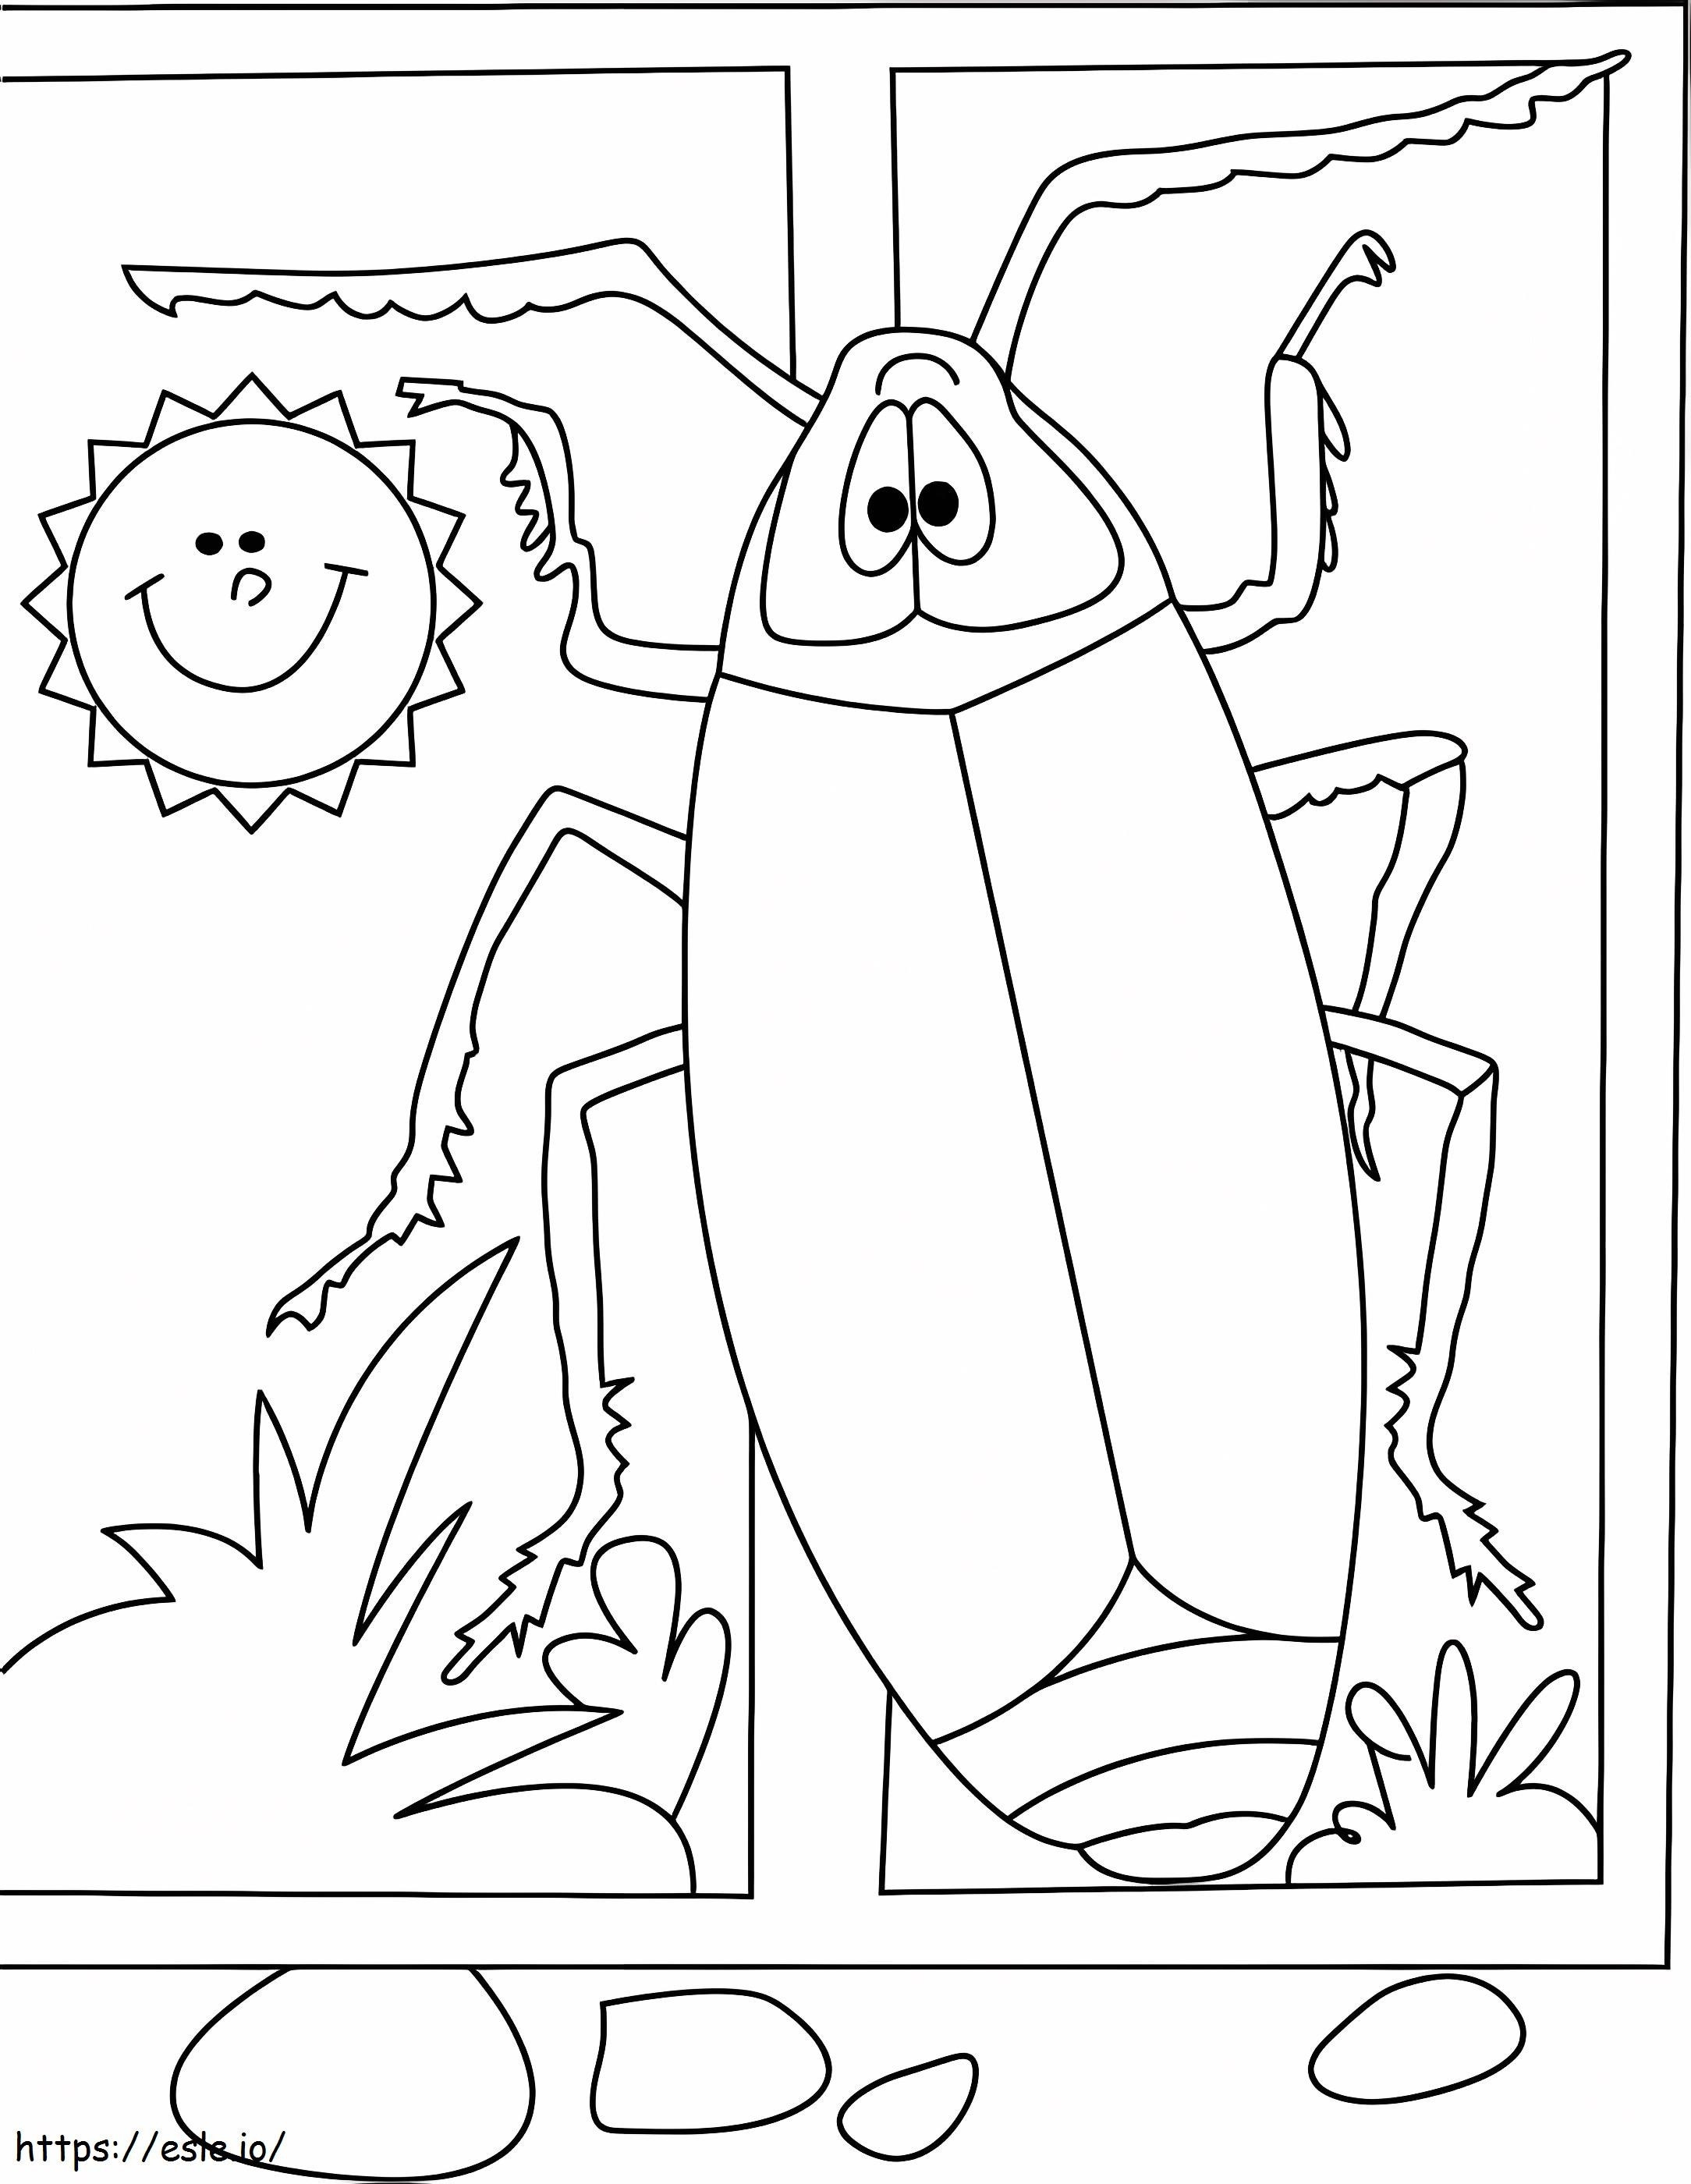 Happy Cockroach coloring page